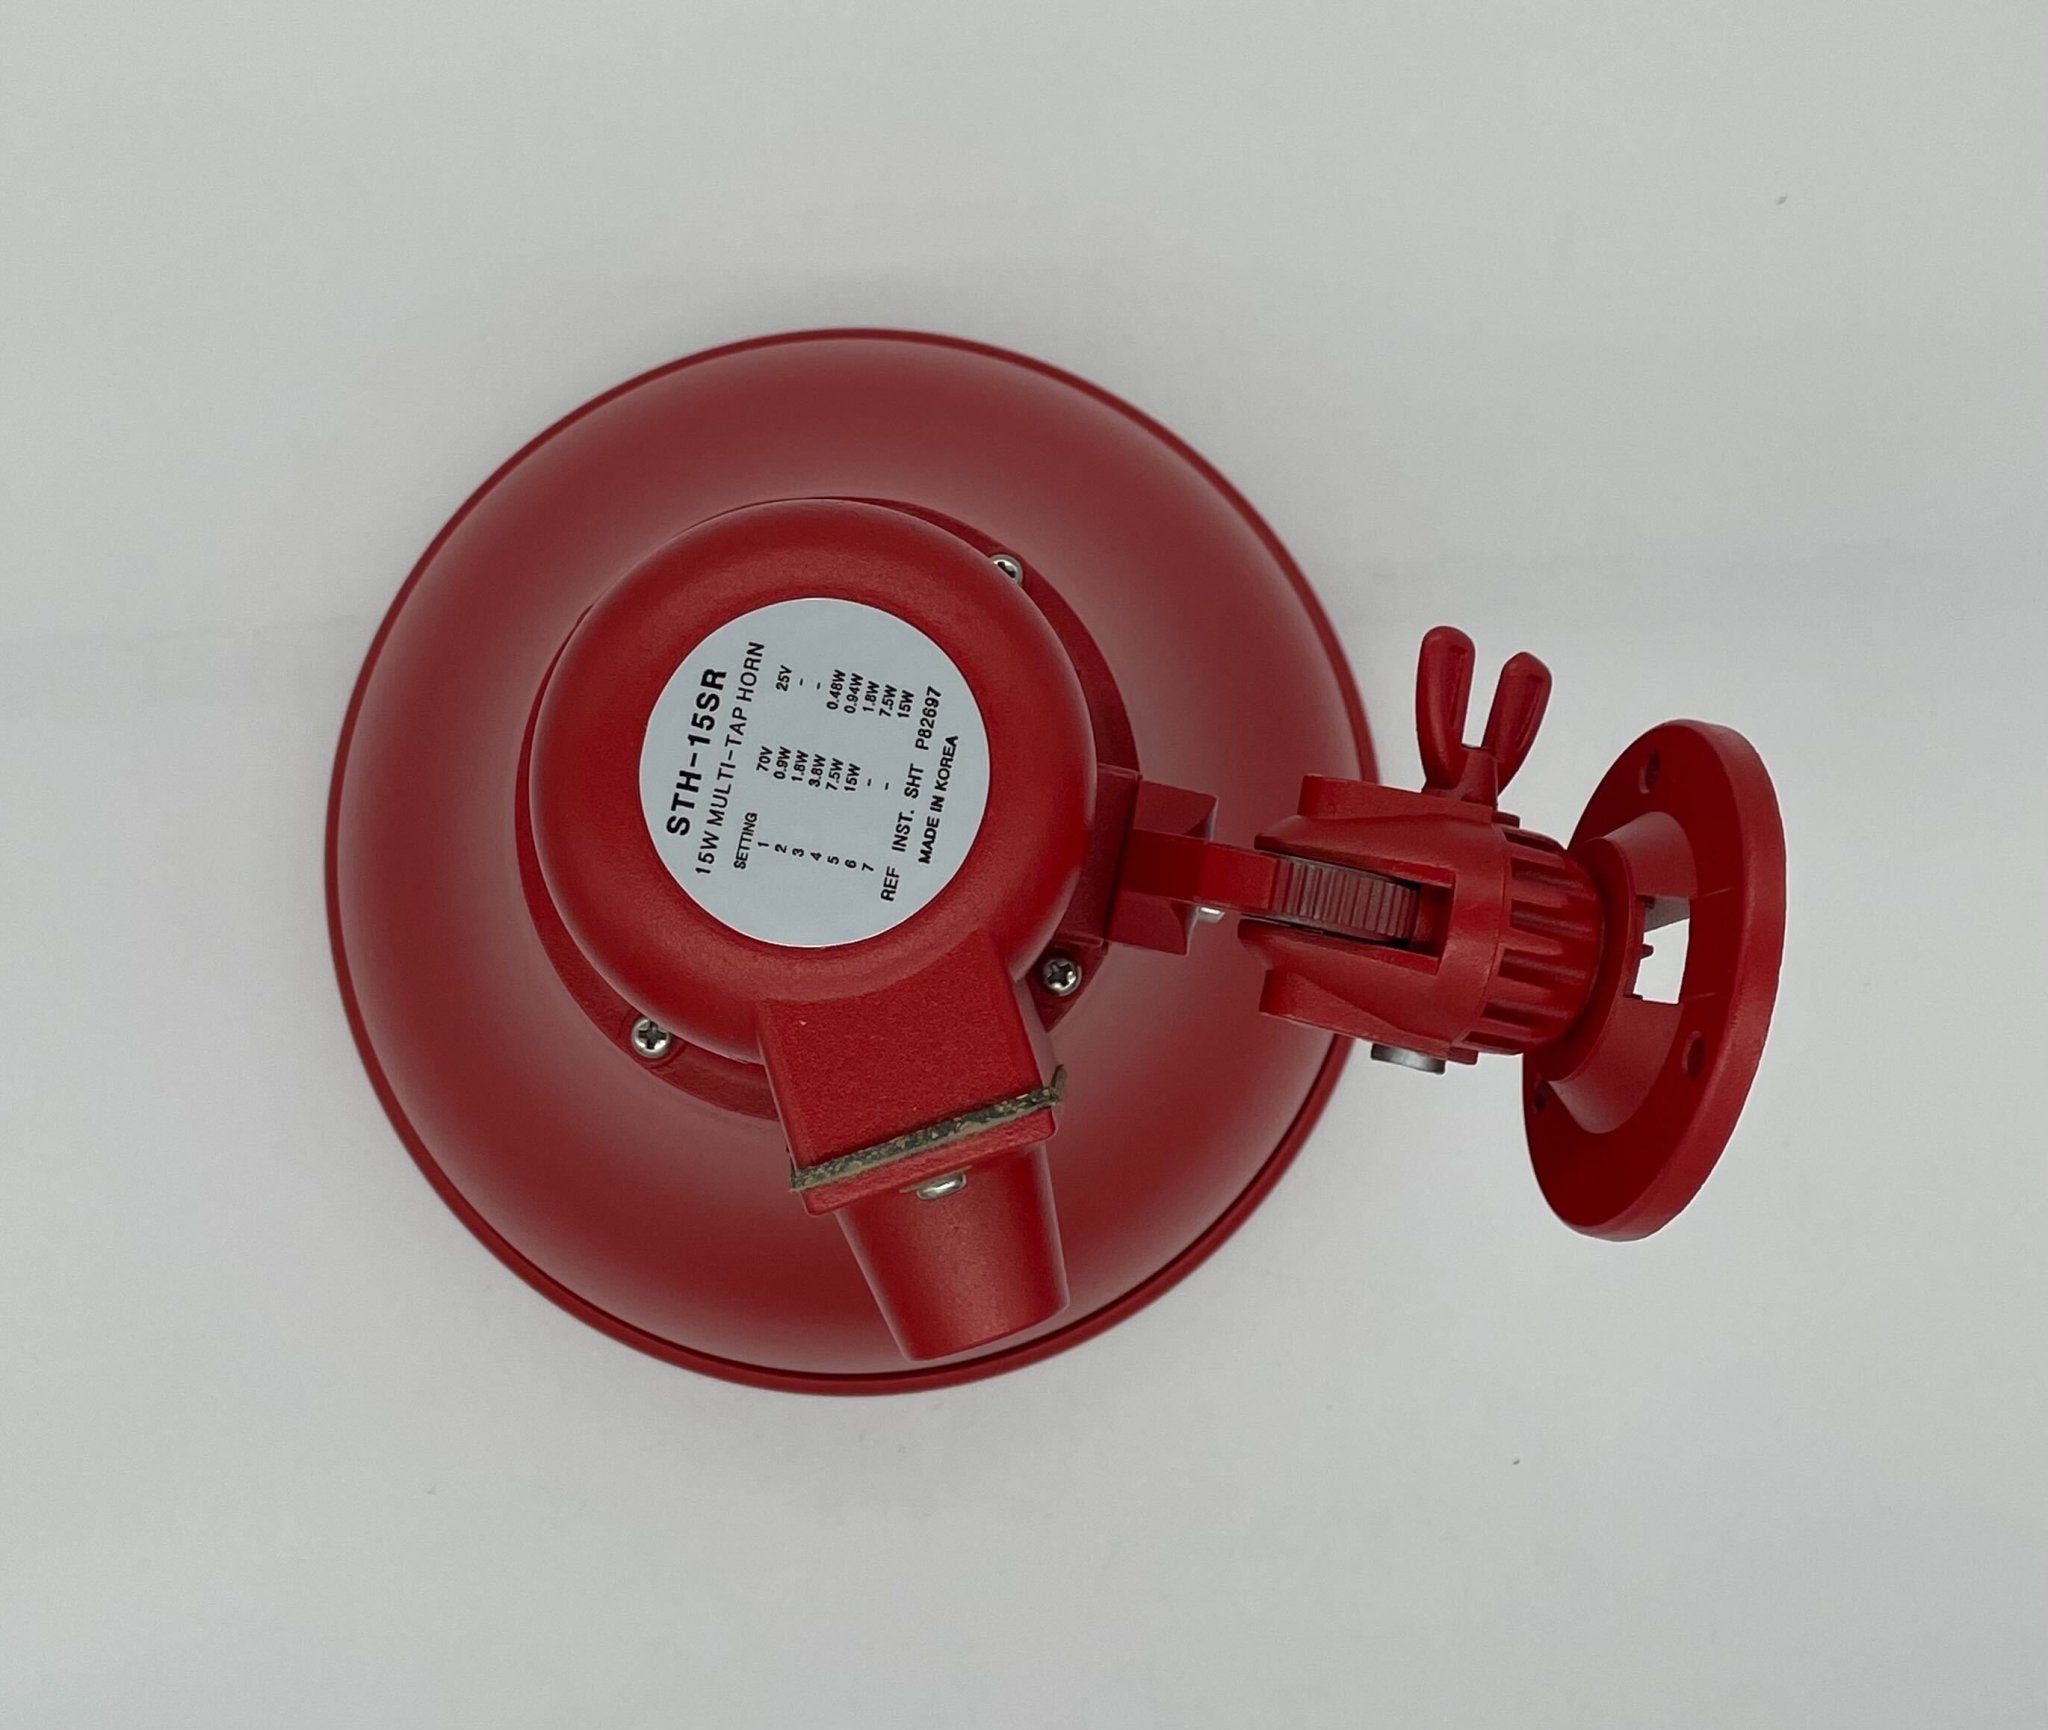 Wheelock STH-15SR - The Fire Alarm Supplier